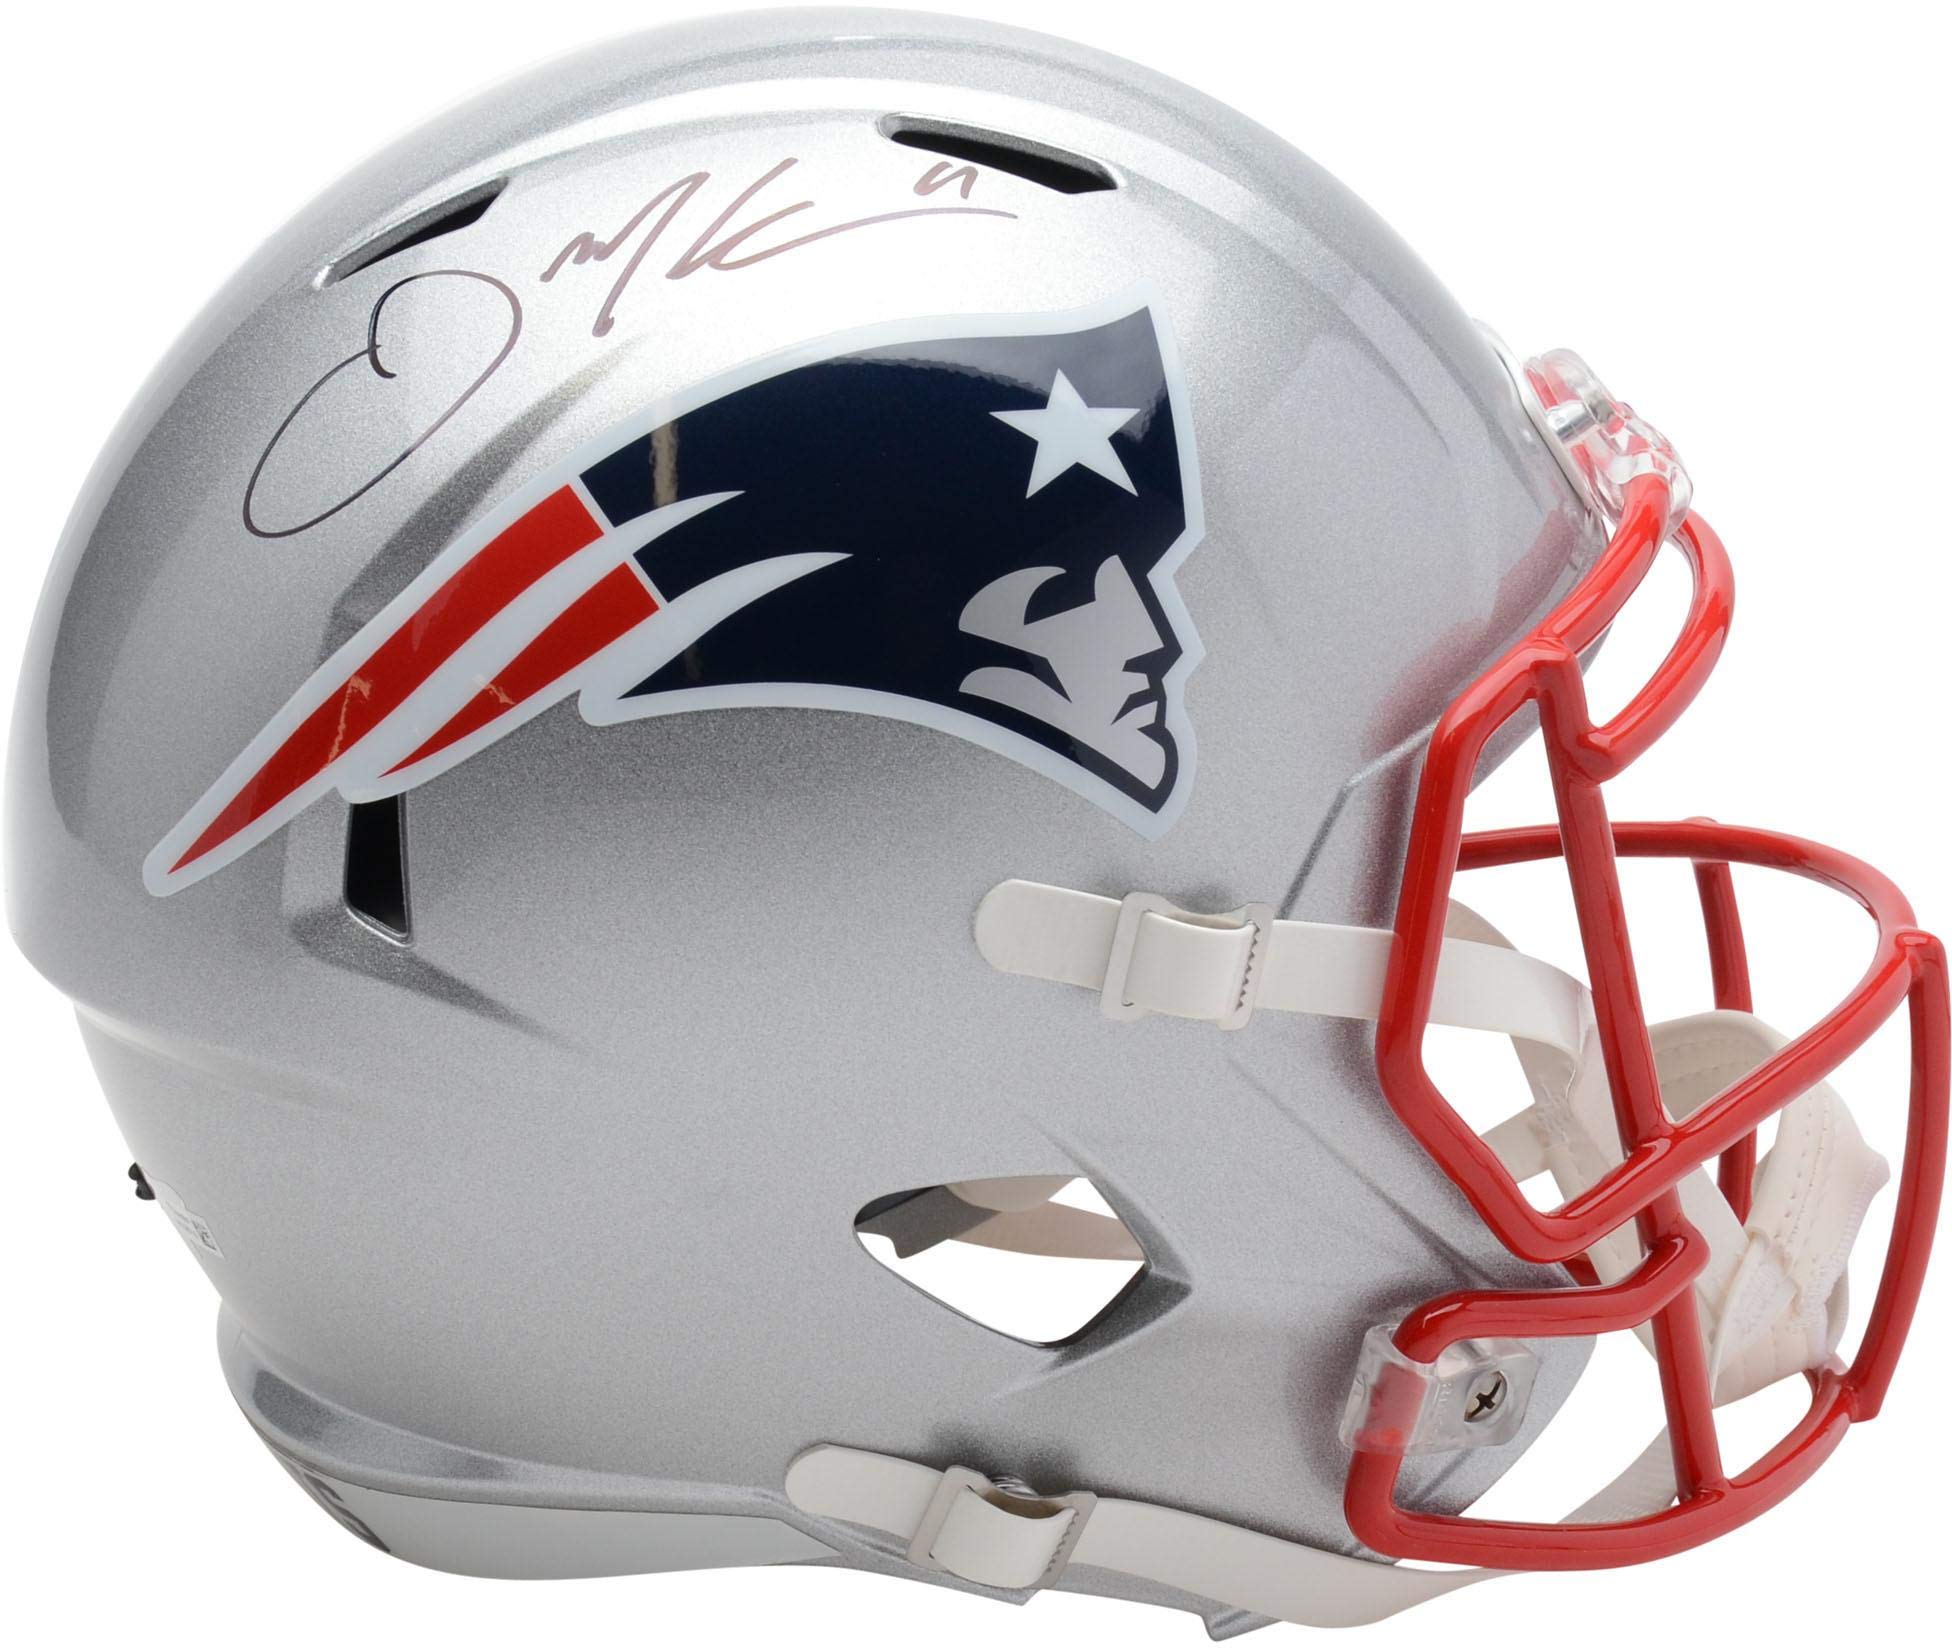 Julian Edelman New England Patriots Autographed Riddell Speed Replica Helmet - Autographed NFL Helmets